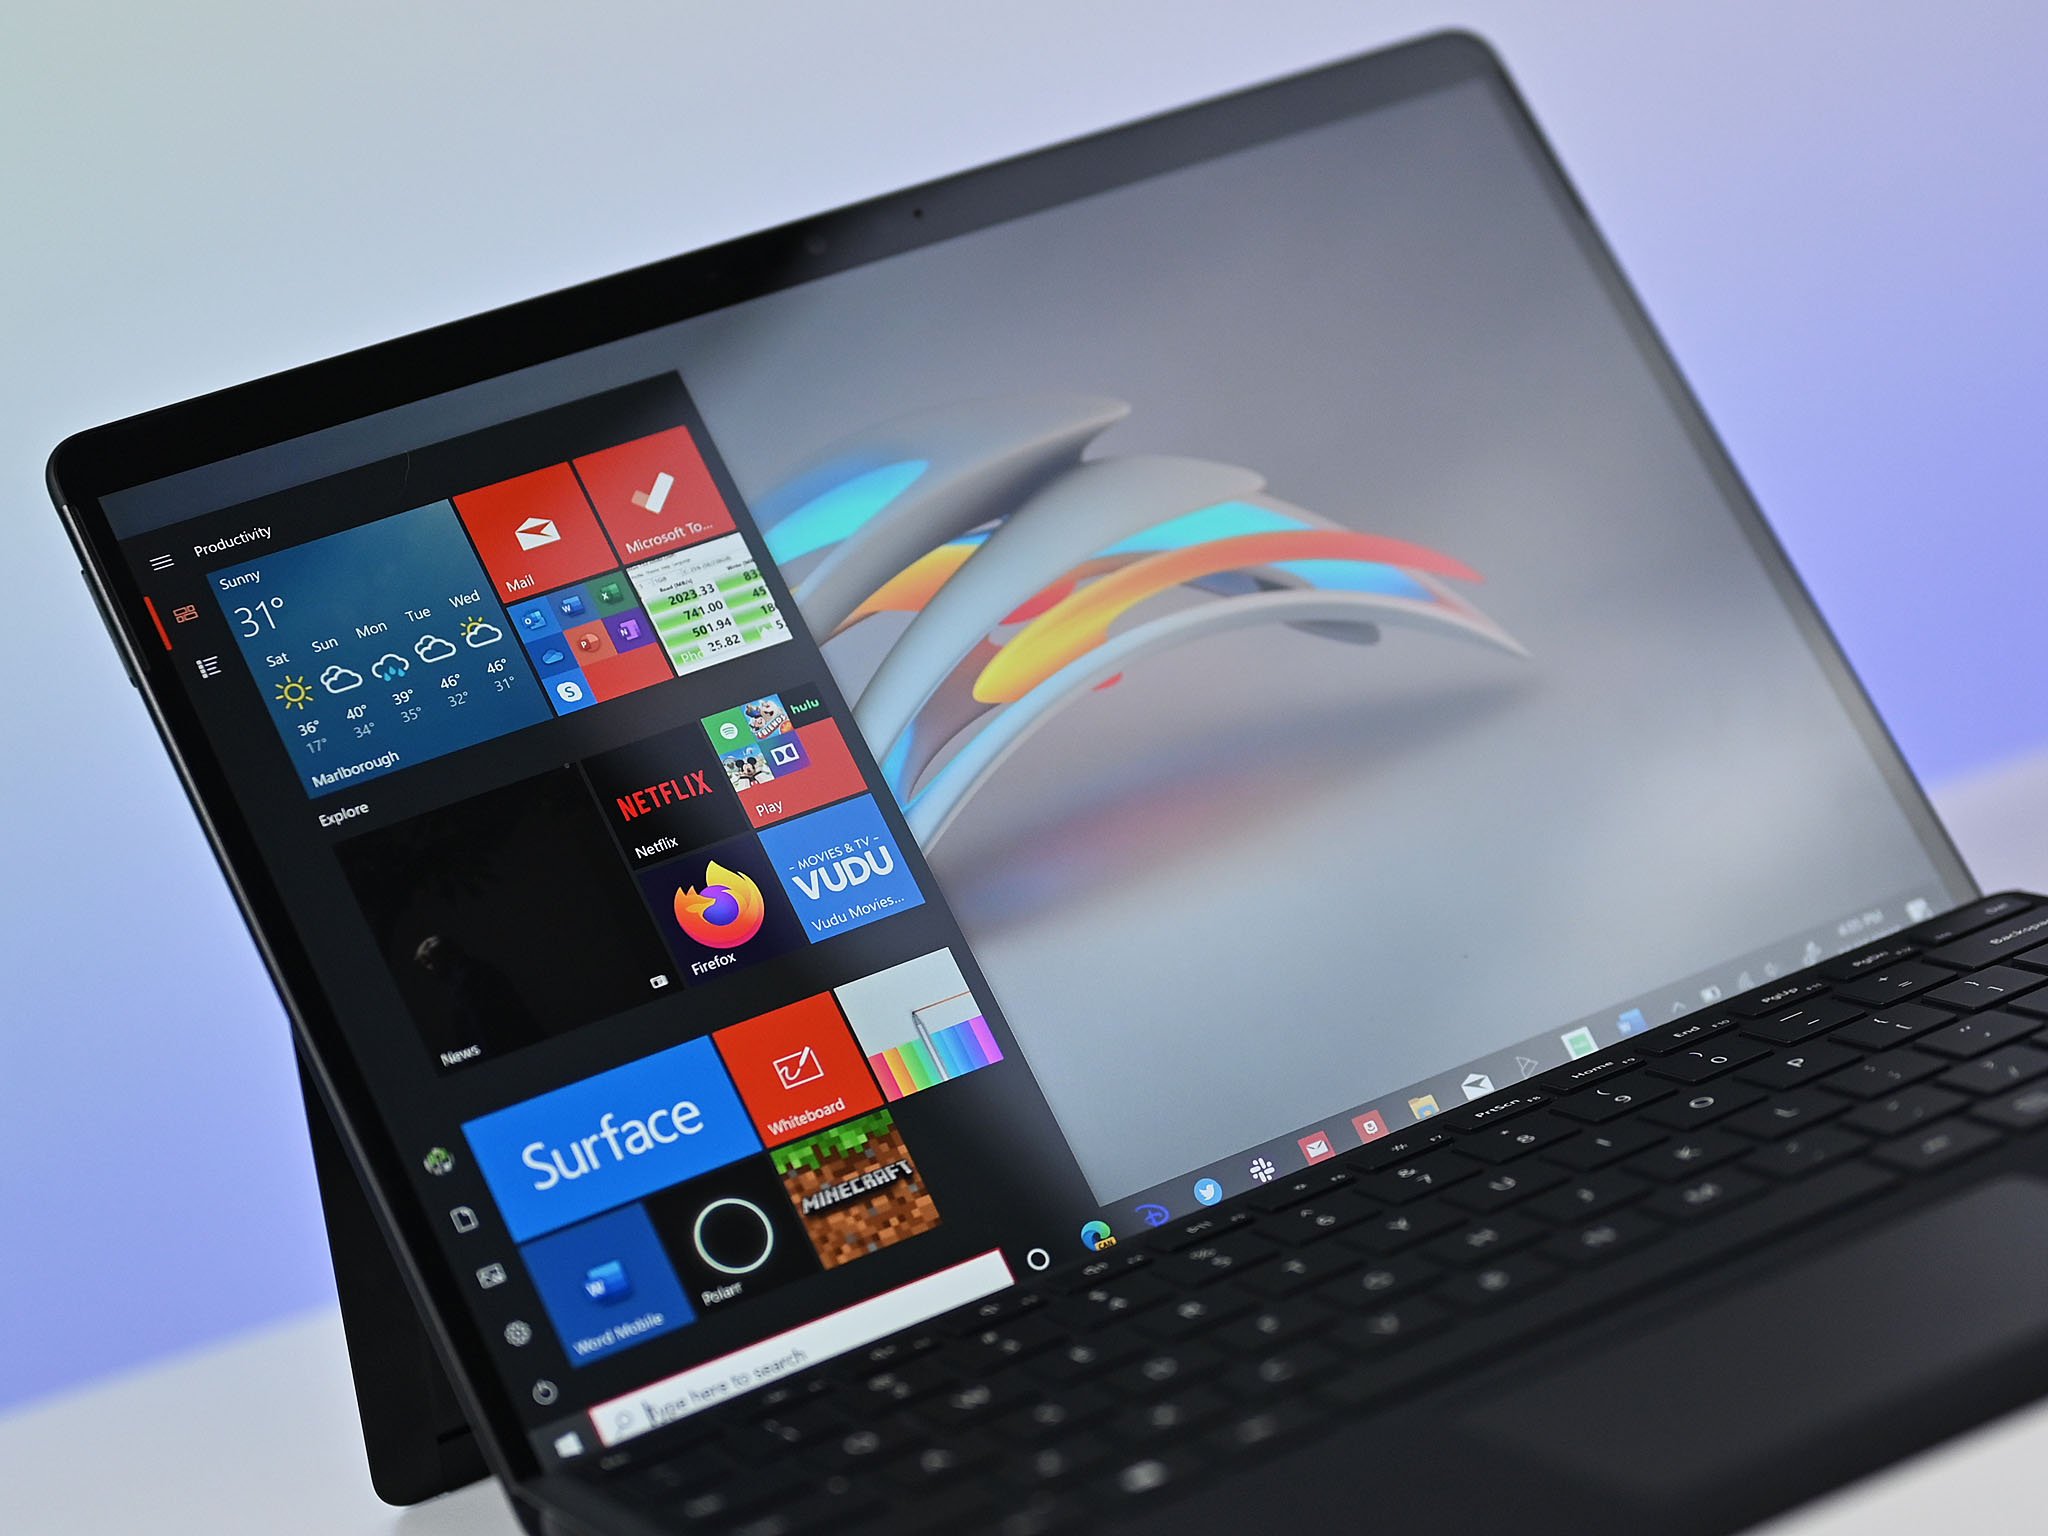 Microsoft warns windows, surface won't hit revenue guidance due to.